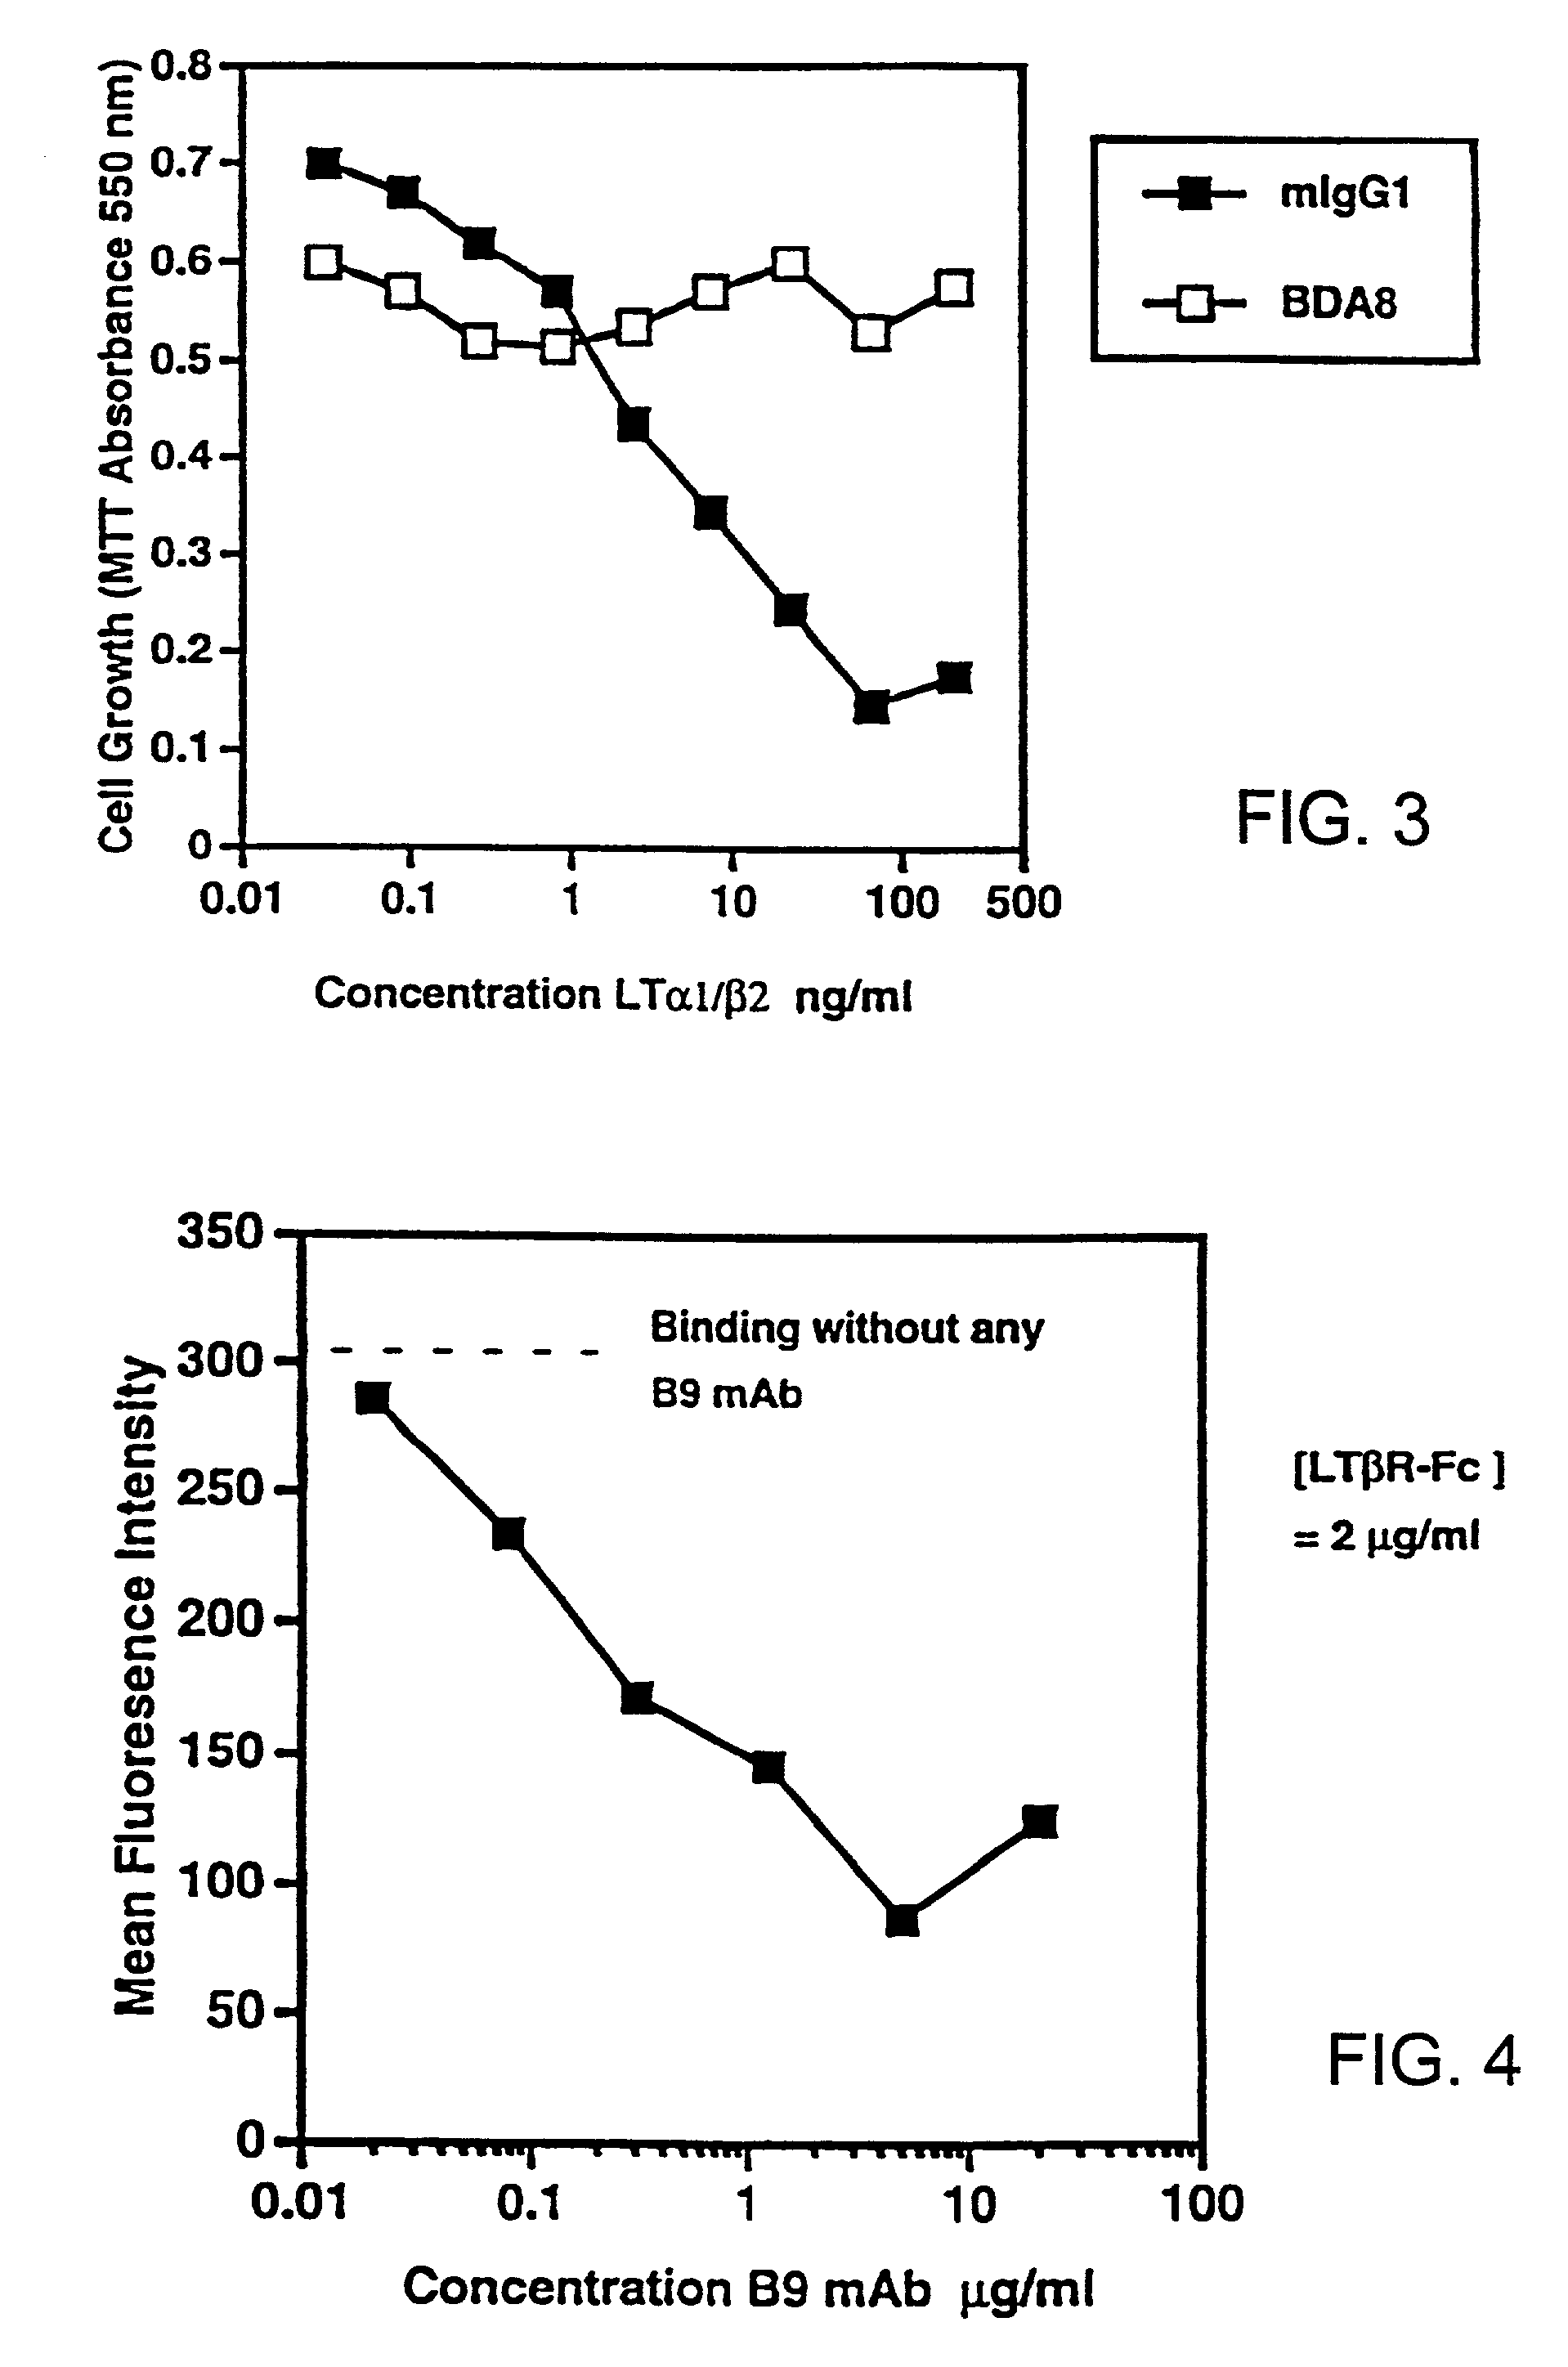 Methods for inhibiting lymphotoxin β receptor signalling